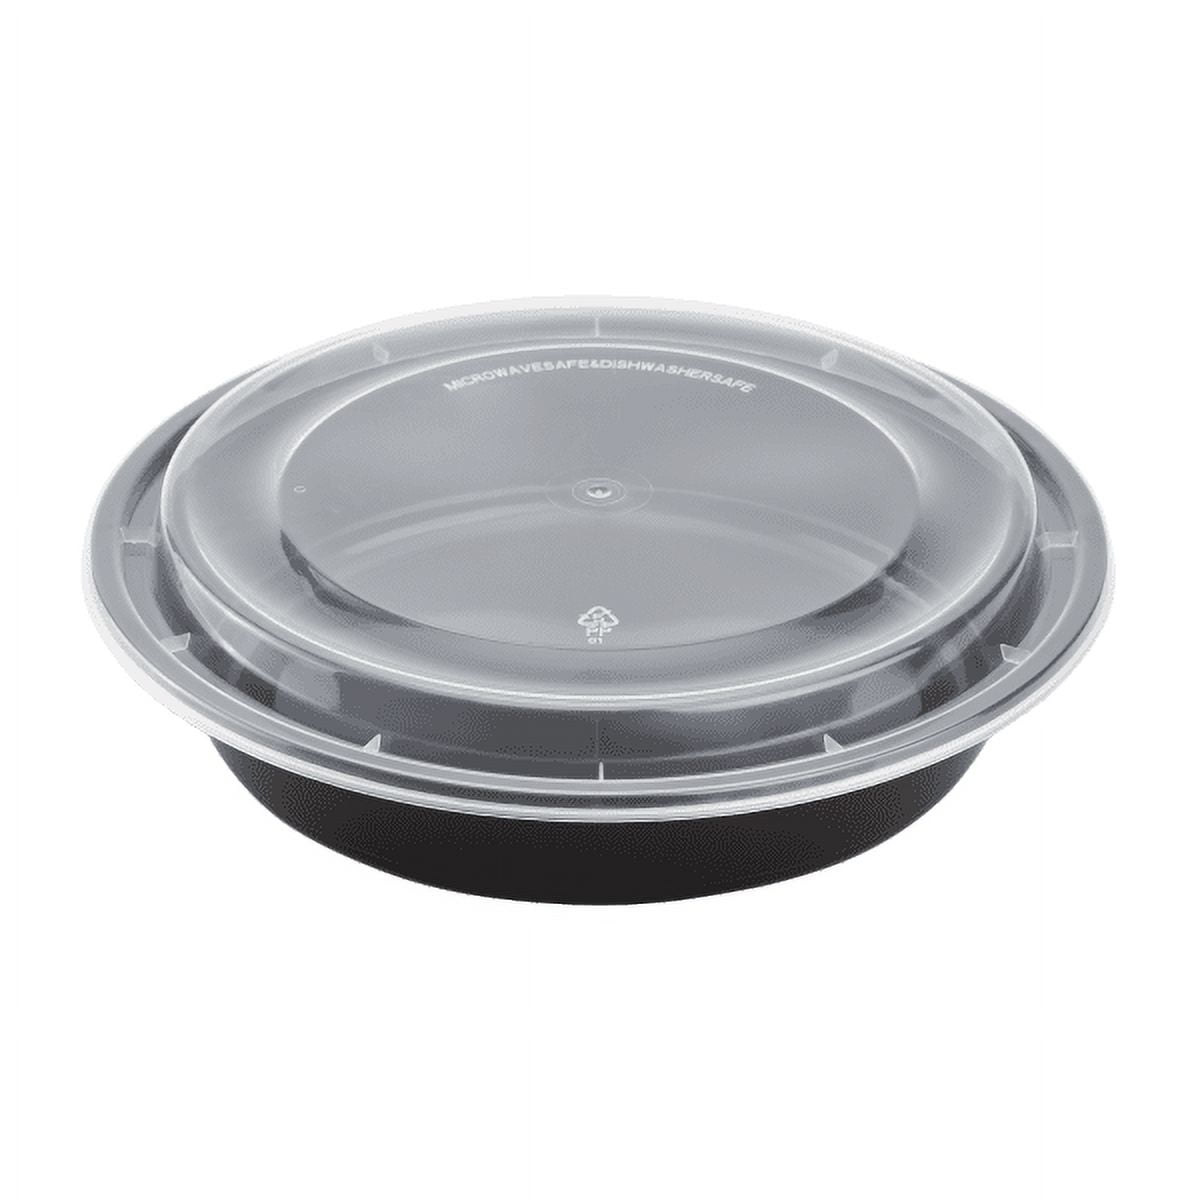 Asporto 32 oz Round Black Plastic To Go Box - with Clear Lid, Microwavable  - 7 1/4 x 7 1/4 x 3 - 100 count box